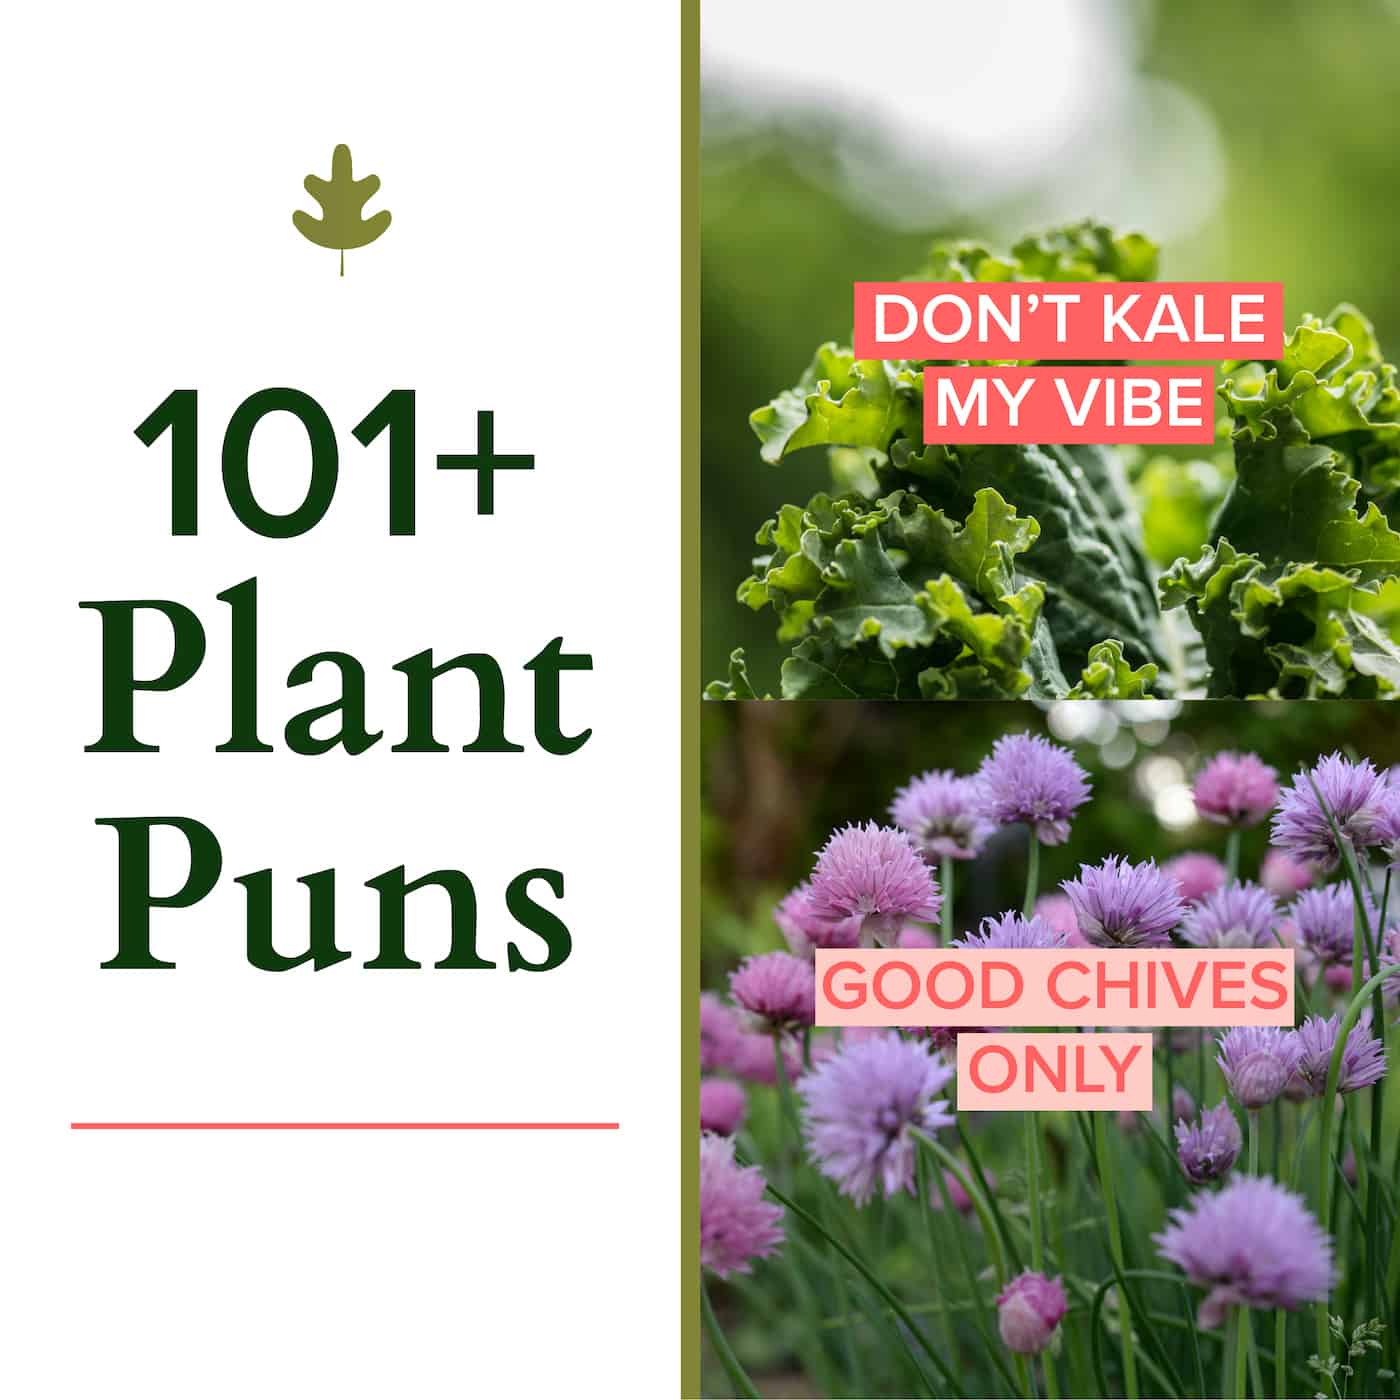 101 plant puns via @home4theharvest